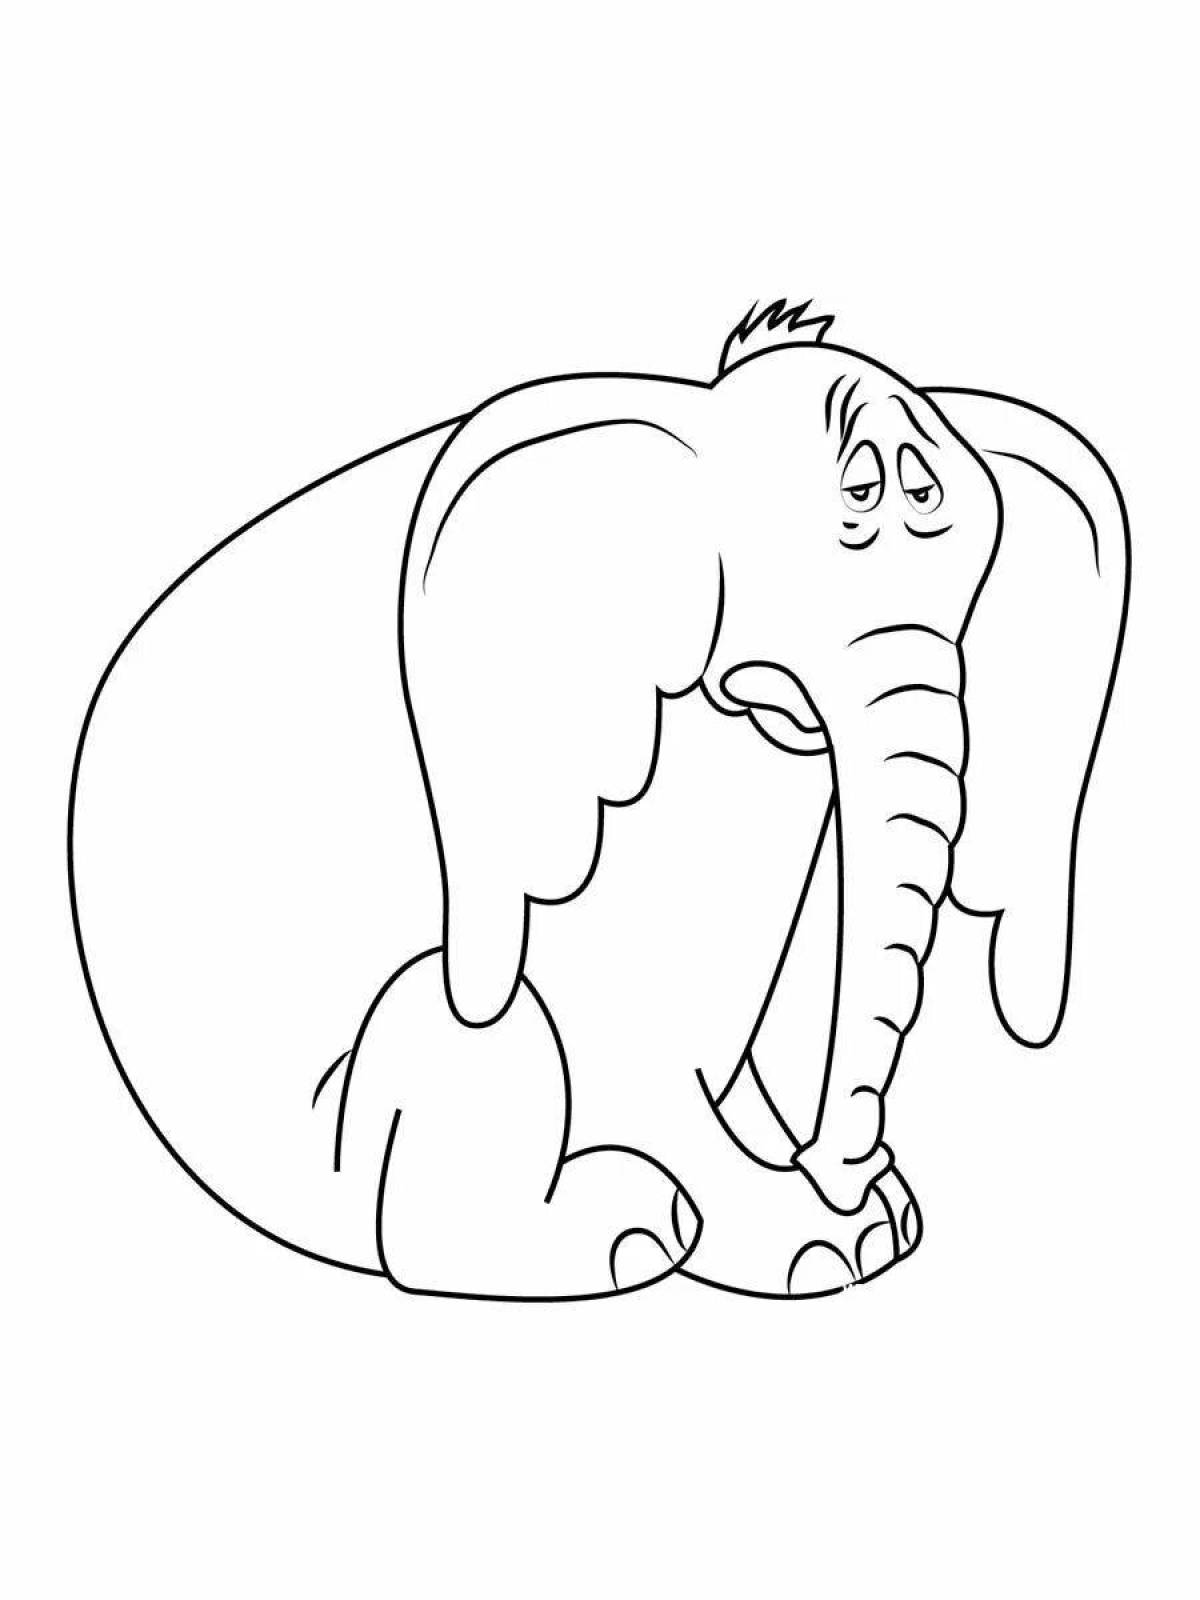 Coloring page joyful elephant